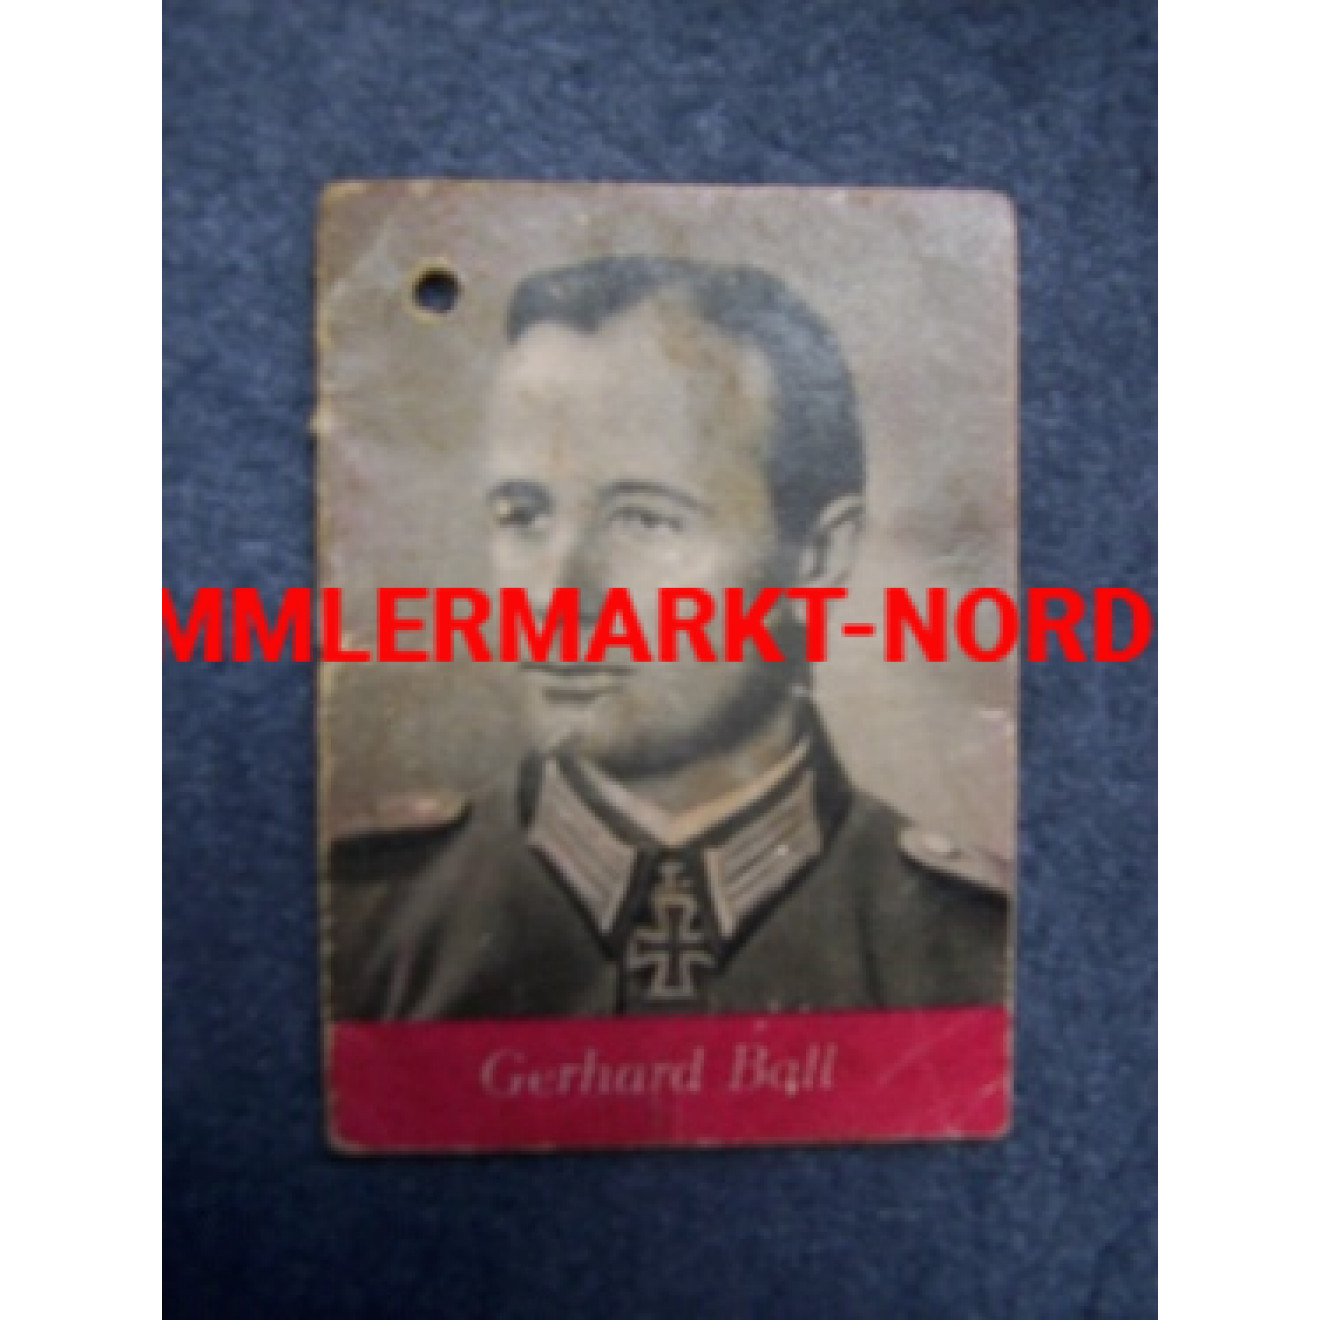 Booklet knight cross owner Gerhard ball